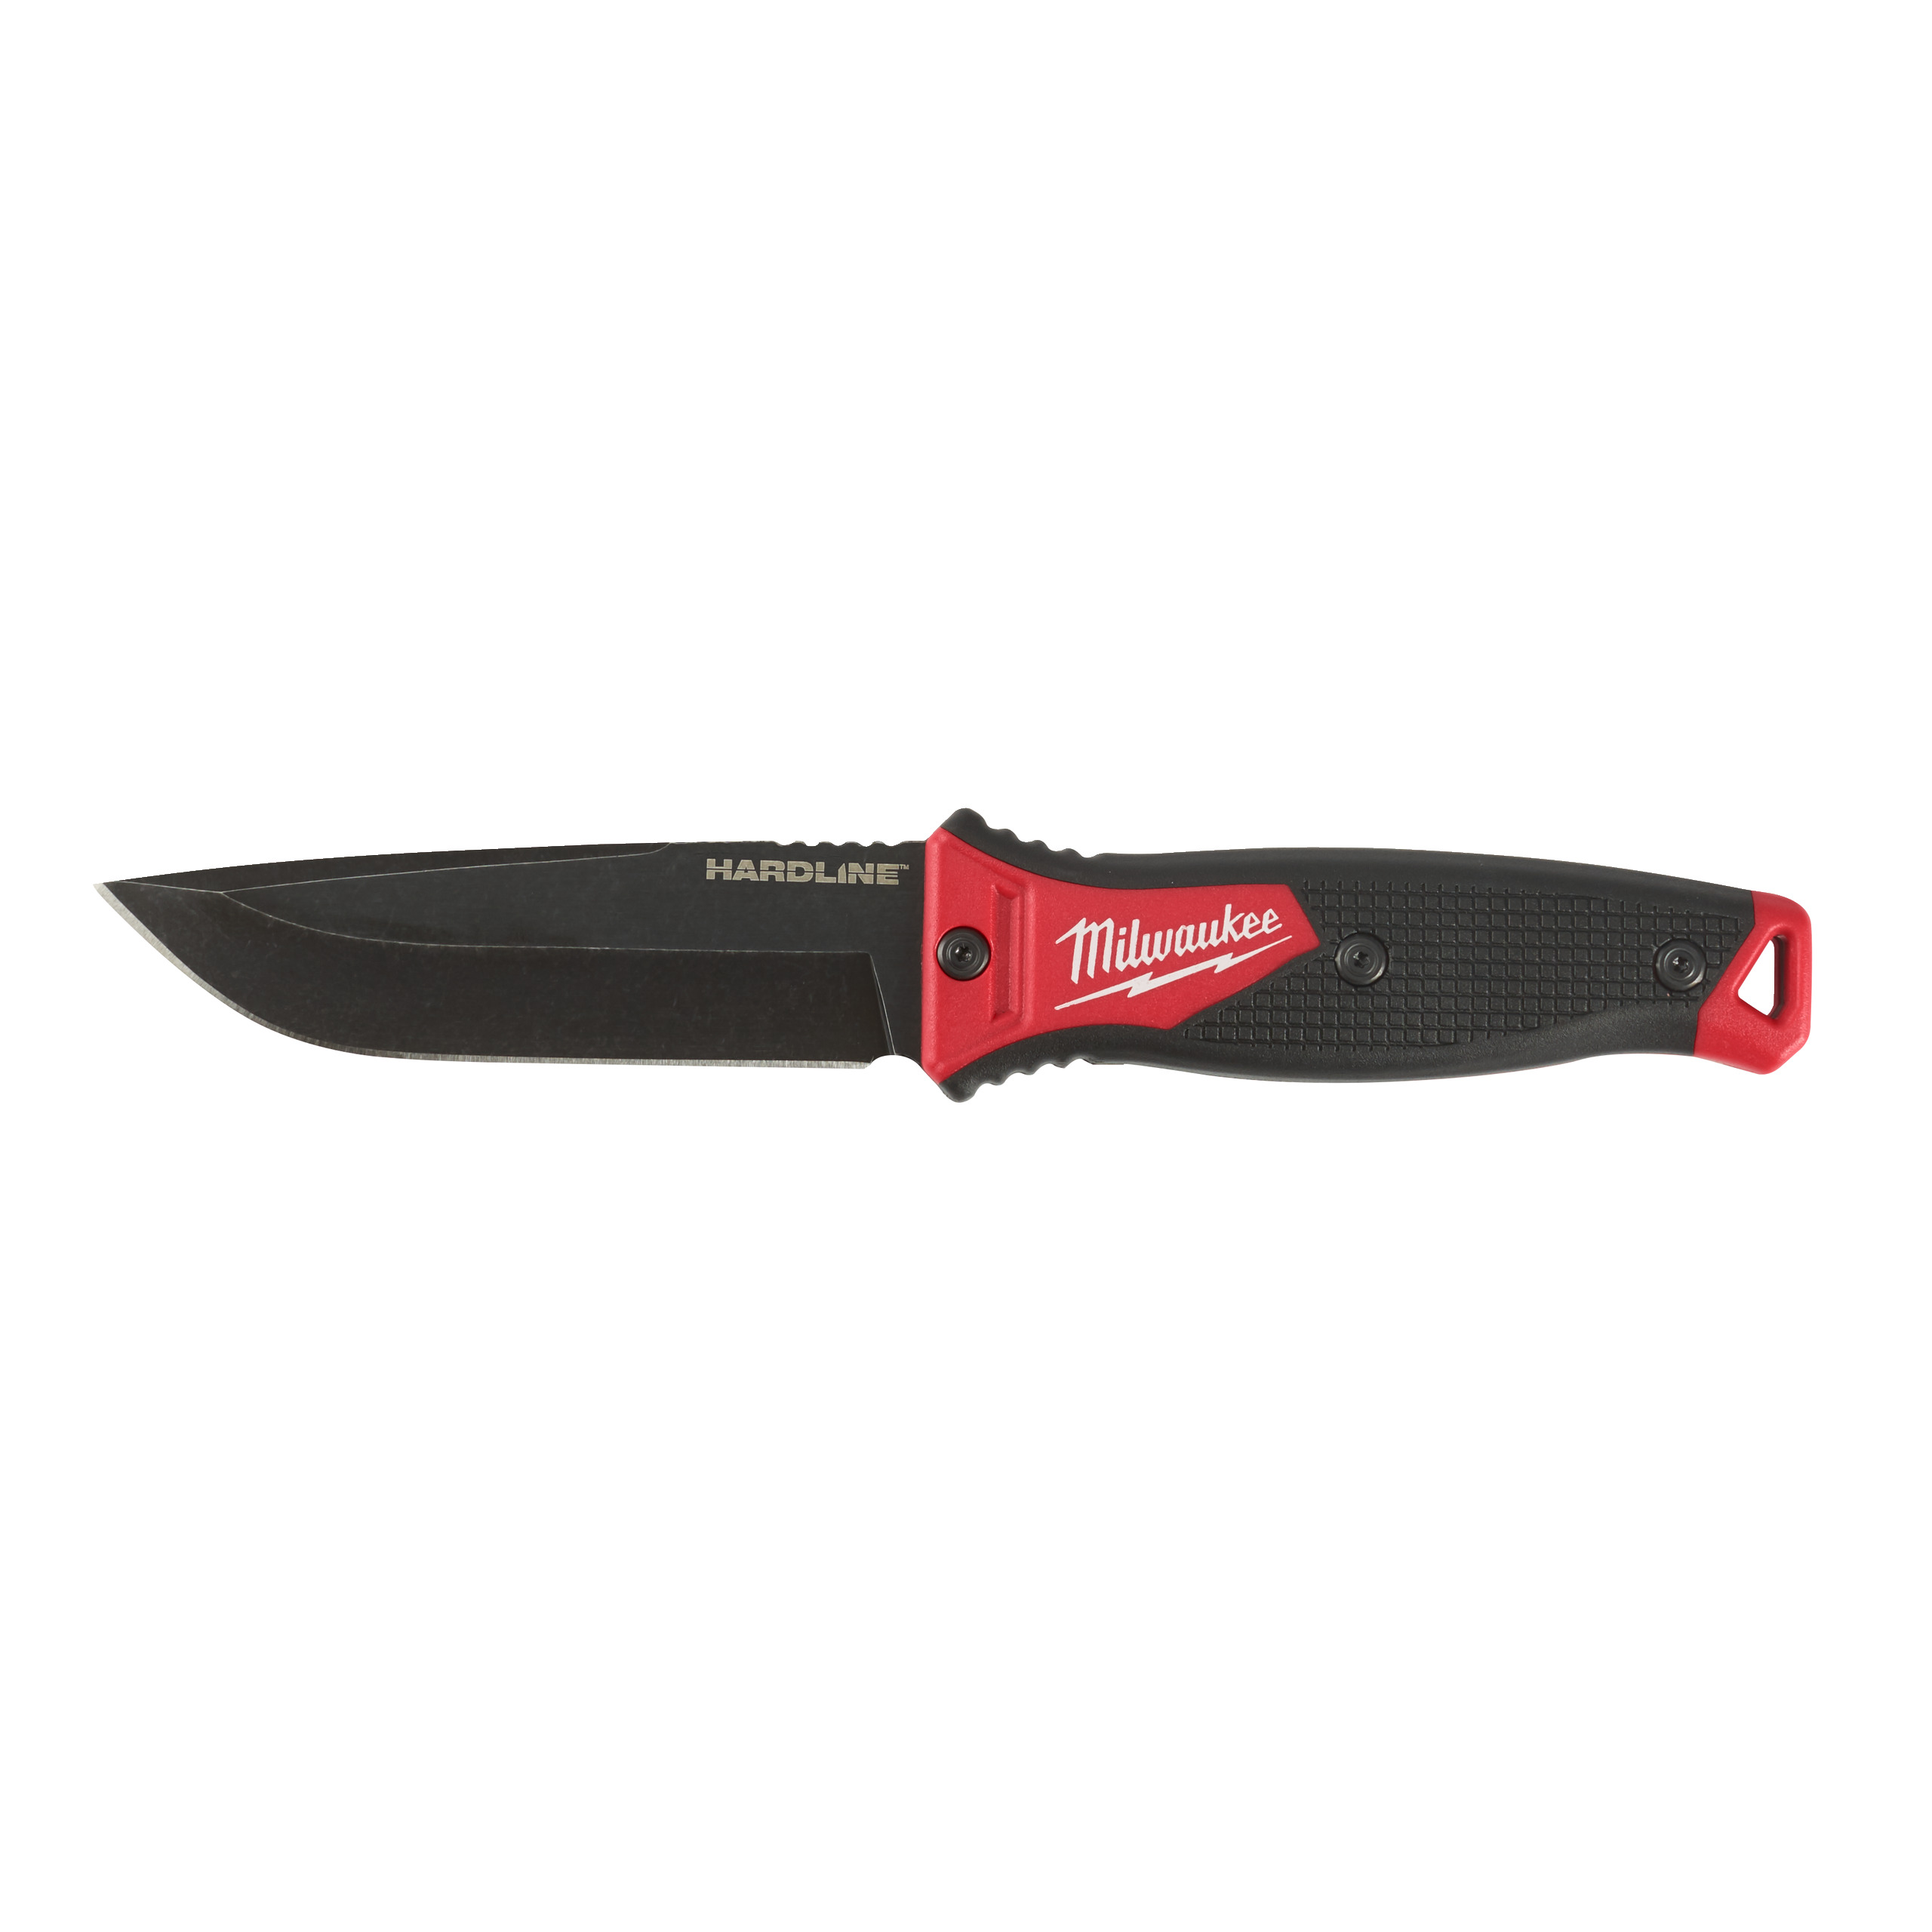 HARDLINE Premium-Messer | mit feststehender Klinge